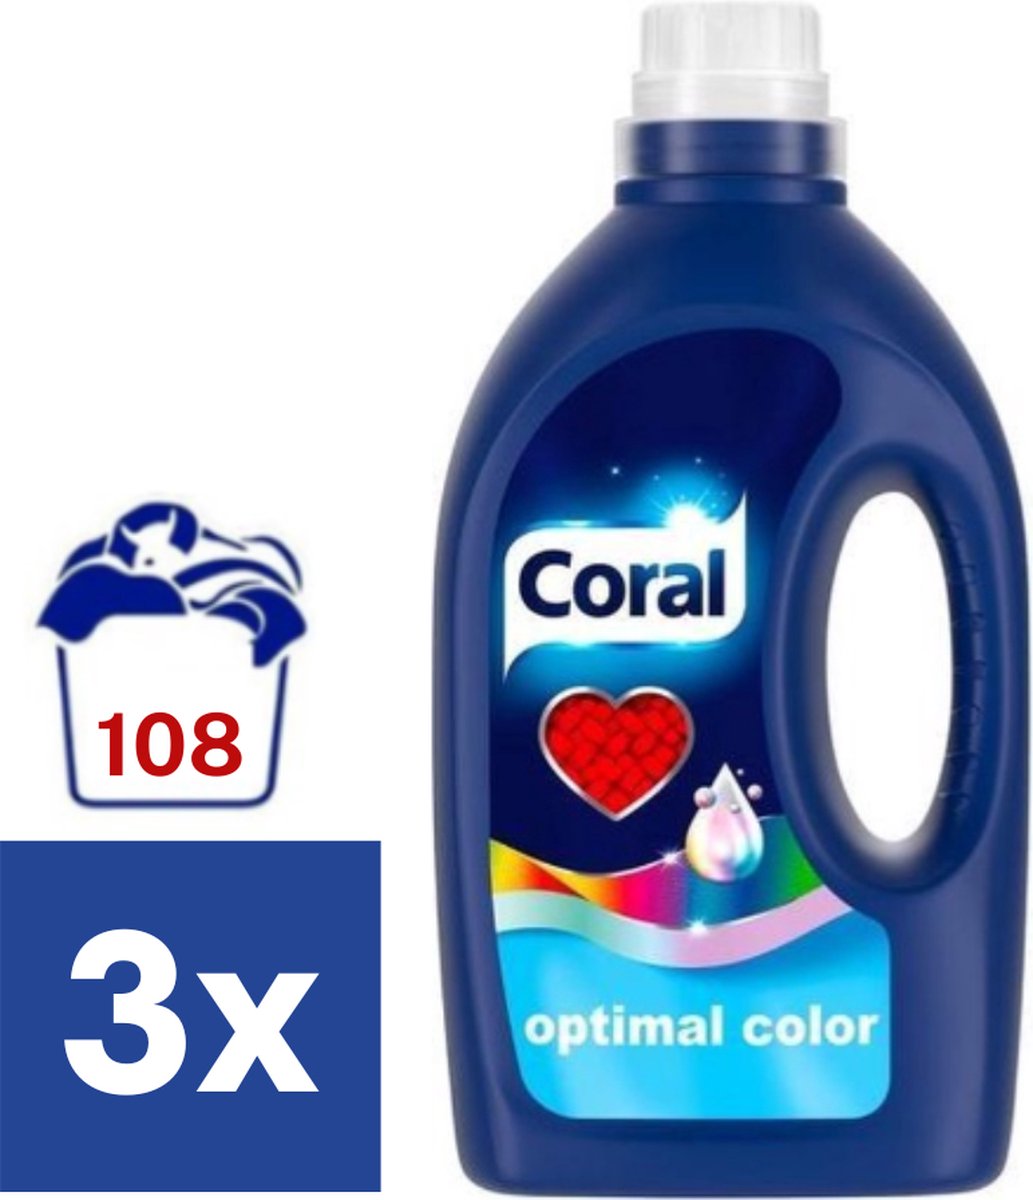 Coral Optimal Color Vloeibaar Wasmiddel - 3 x 1.728 l (108 wasbeurten)